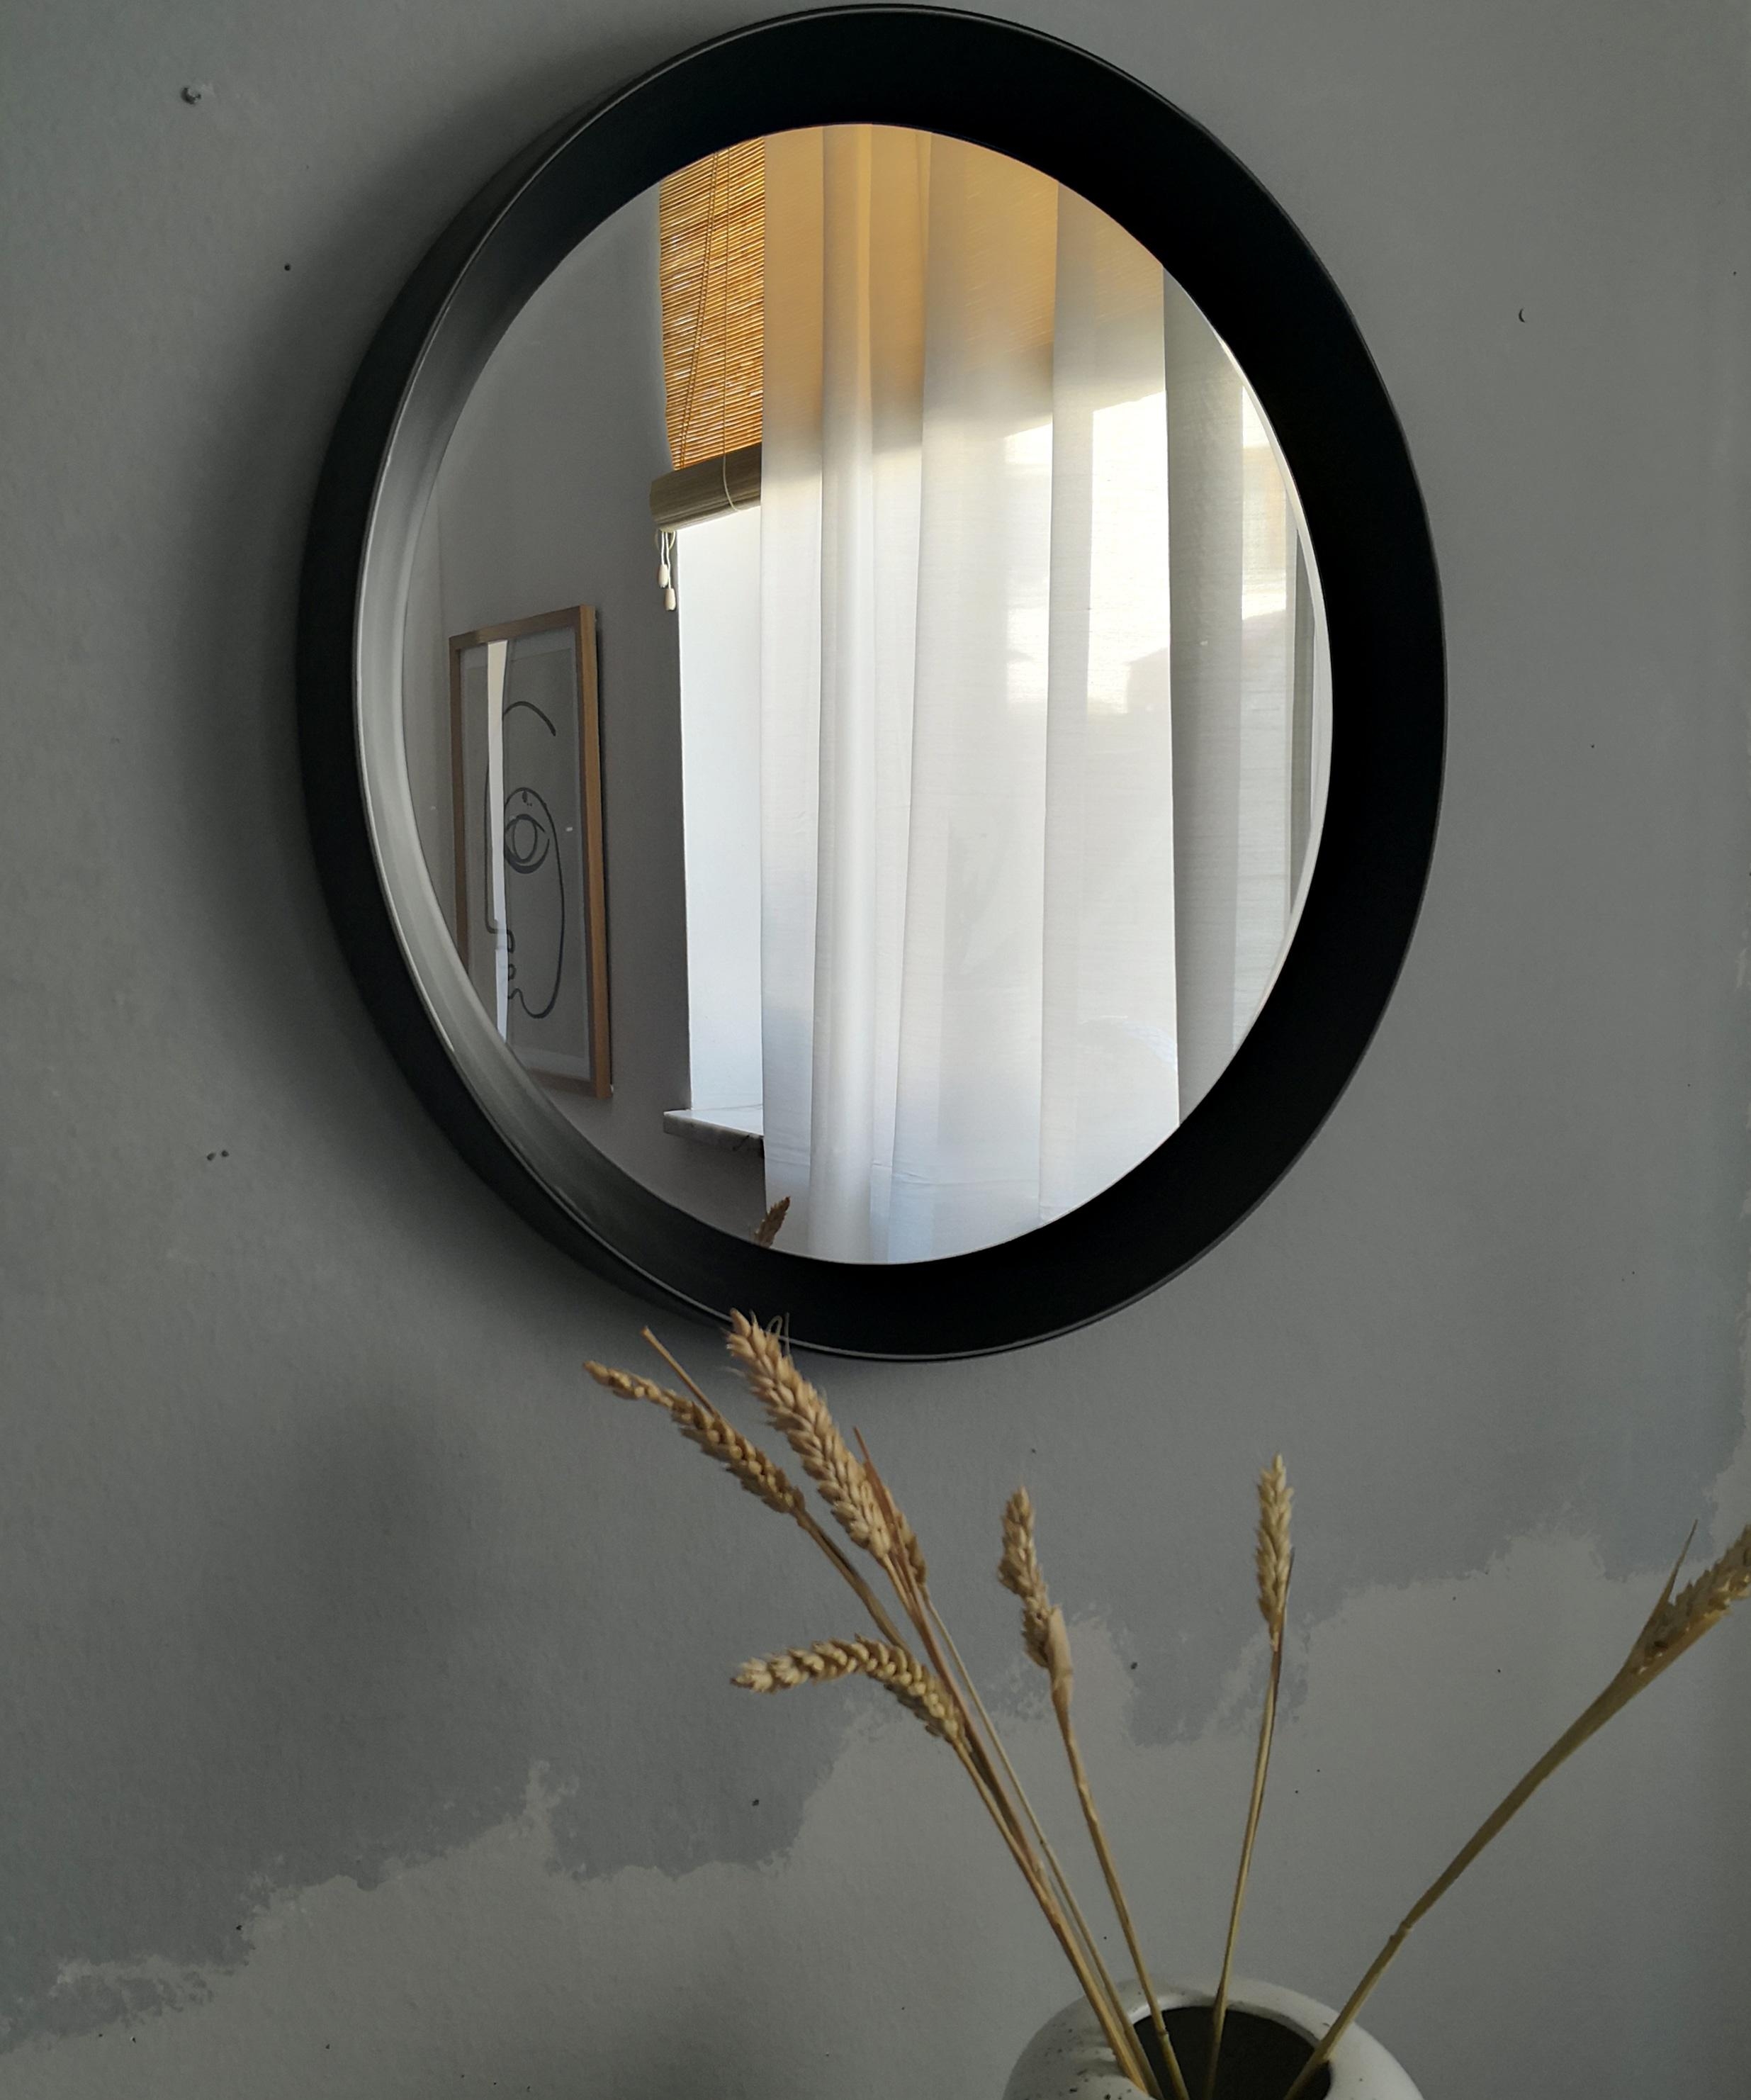 #windowview #livingroom #mirror #spiegel #perspektivenwechsel #changeofperspective #fromwhereistand 